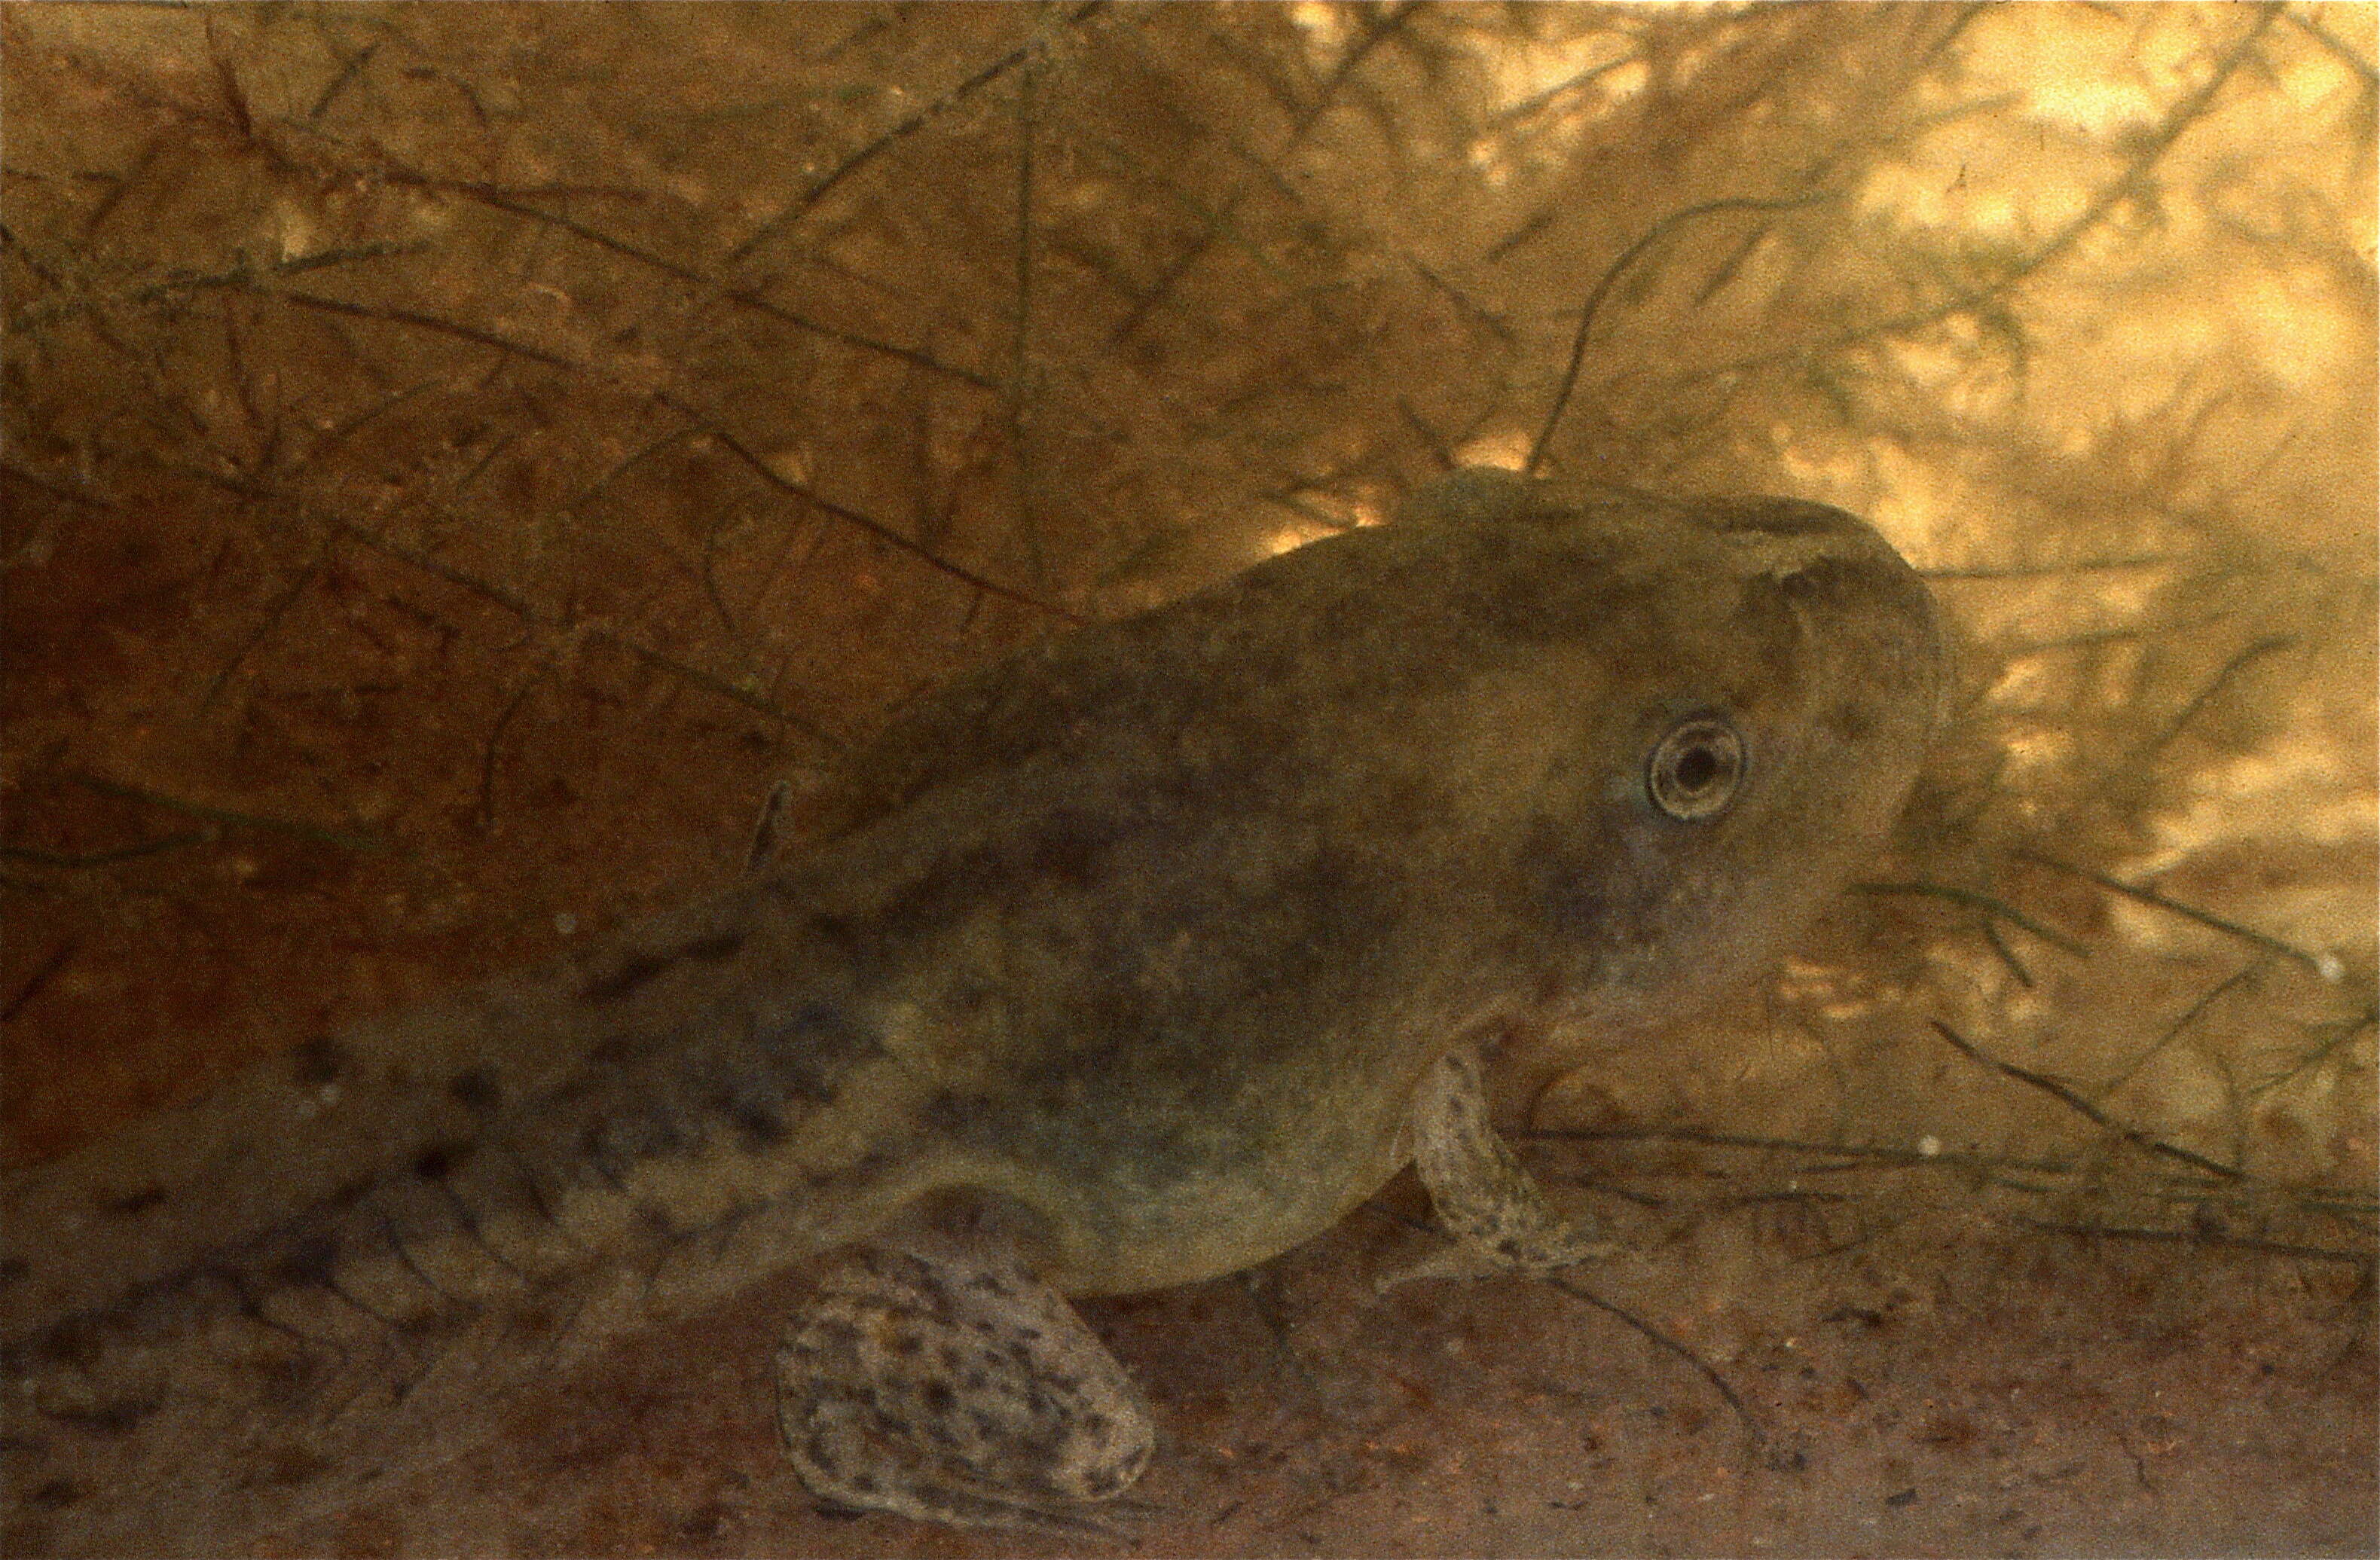 Image of spadefoot toads